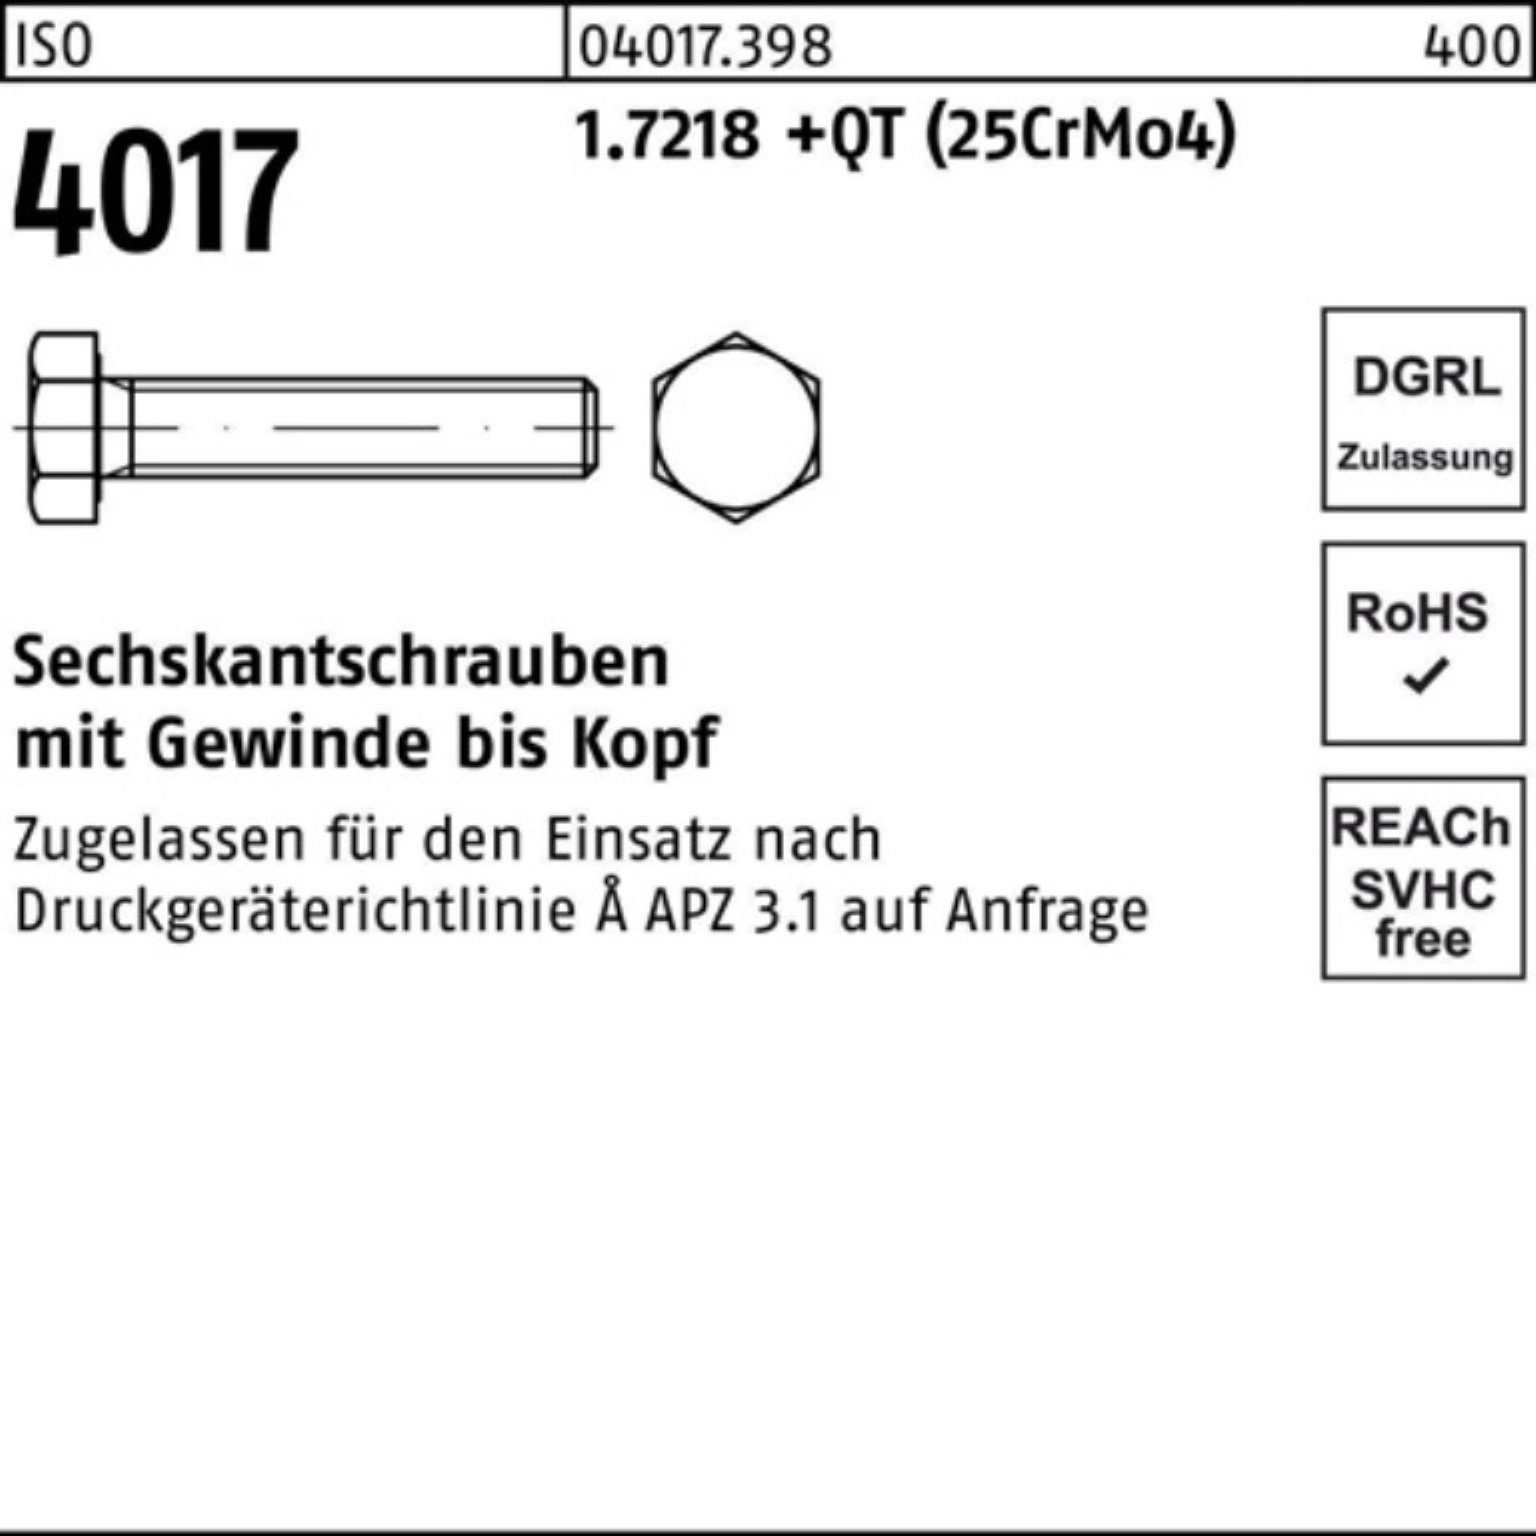 Bufab Sechskantschraube 100er VG M20x 1.7218 100 ISO +QT 4017 (25CrMo4) Sechskantschraube Pack